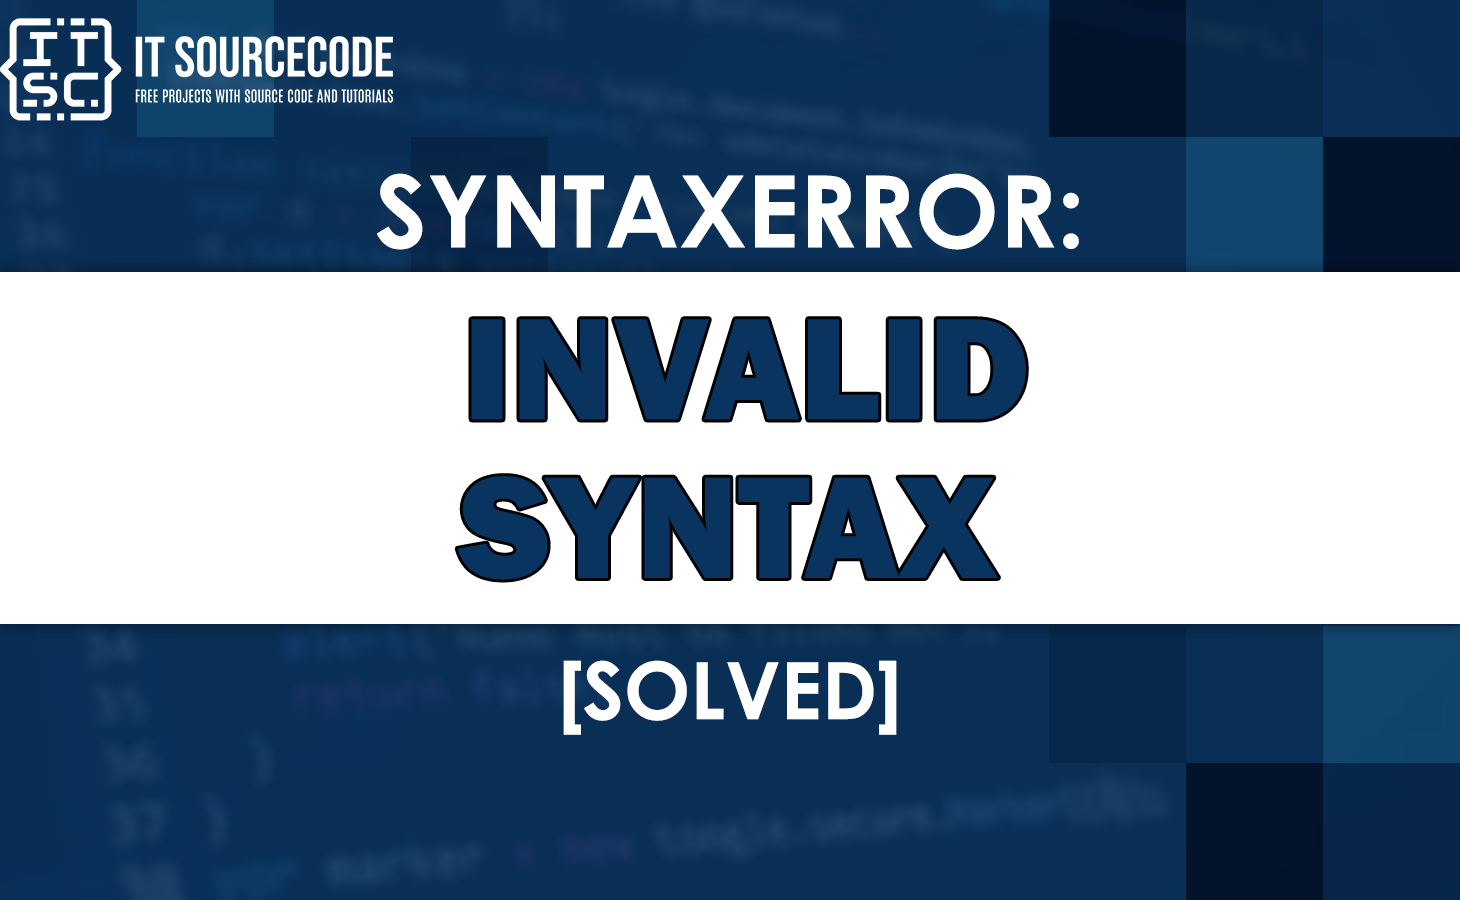 Syntaxerror: invalid syntax